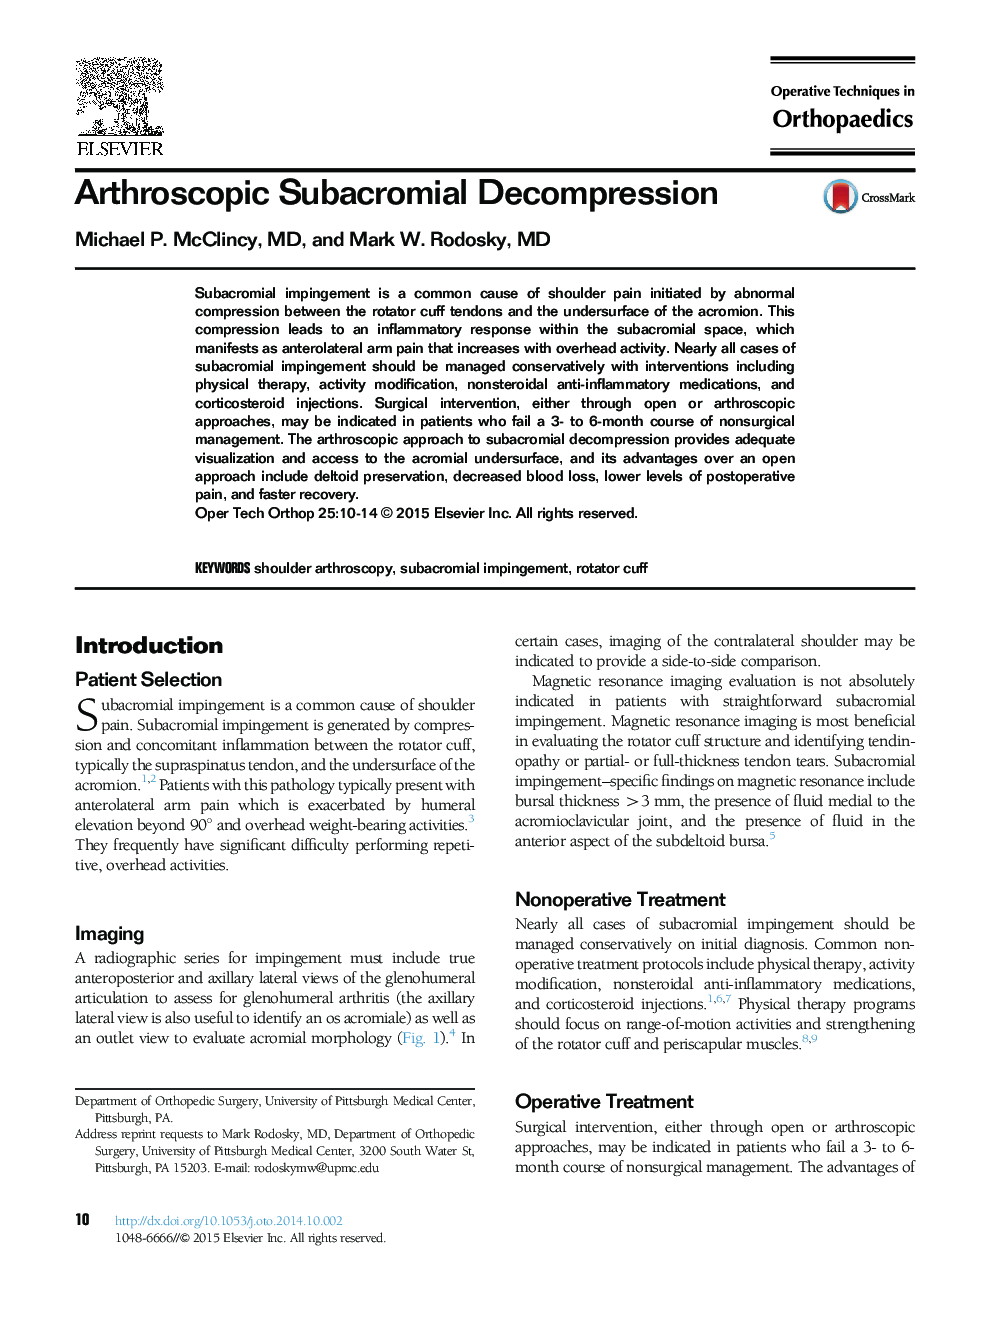 Arthroscopic Subacromial Decompression